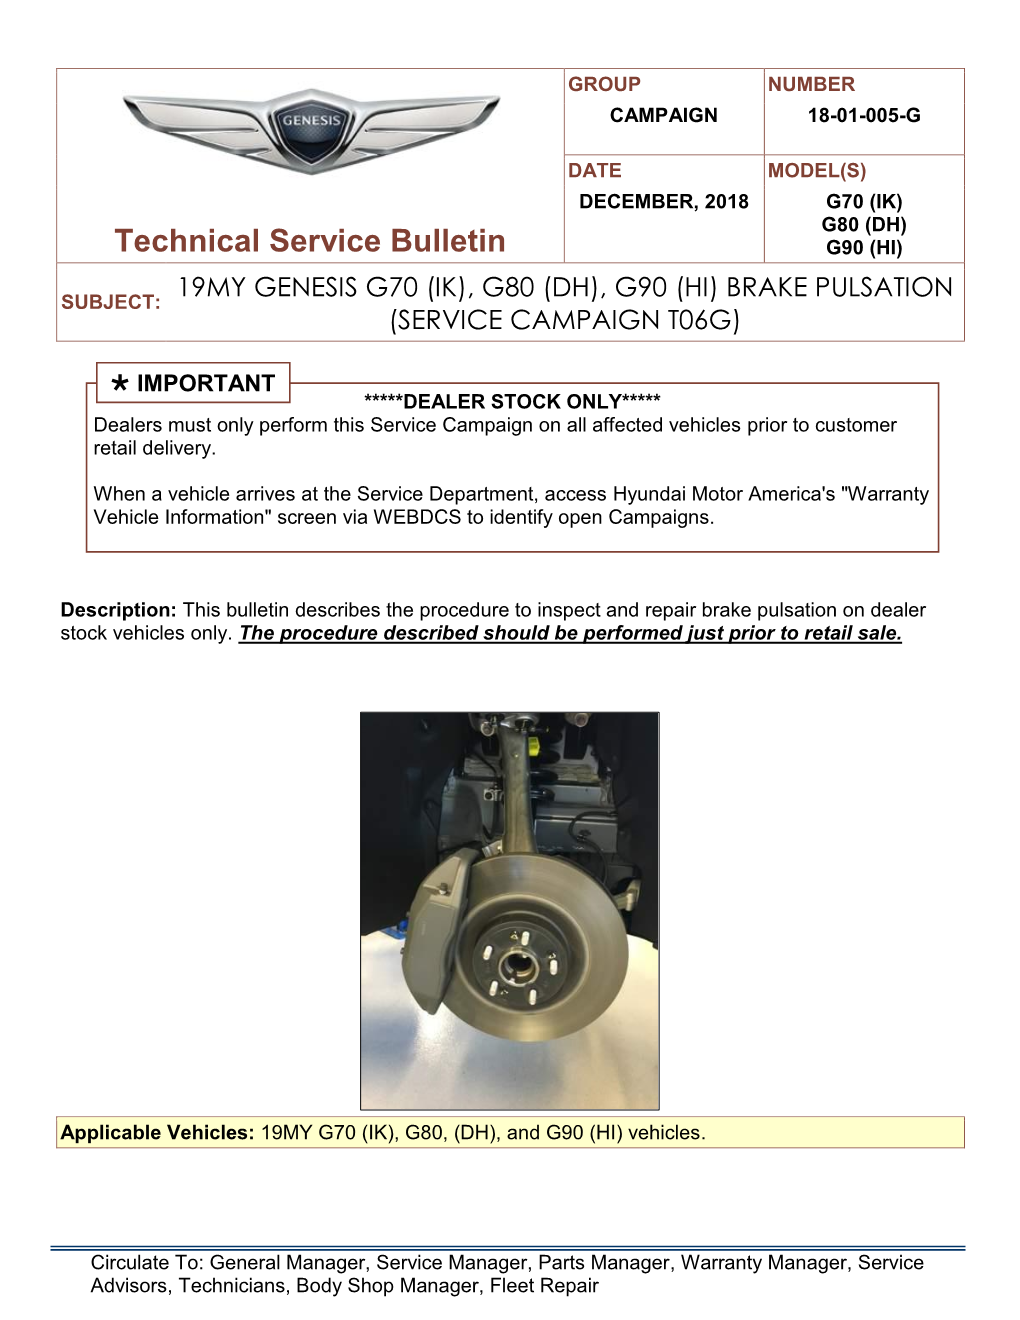 Genesis G70 (Ik), G80 (Dh), G90 (Hi) Brake Pulsation Subject: (Service Campaign T06g)